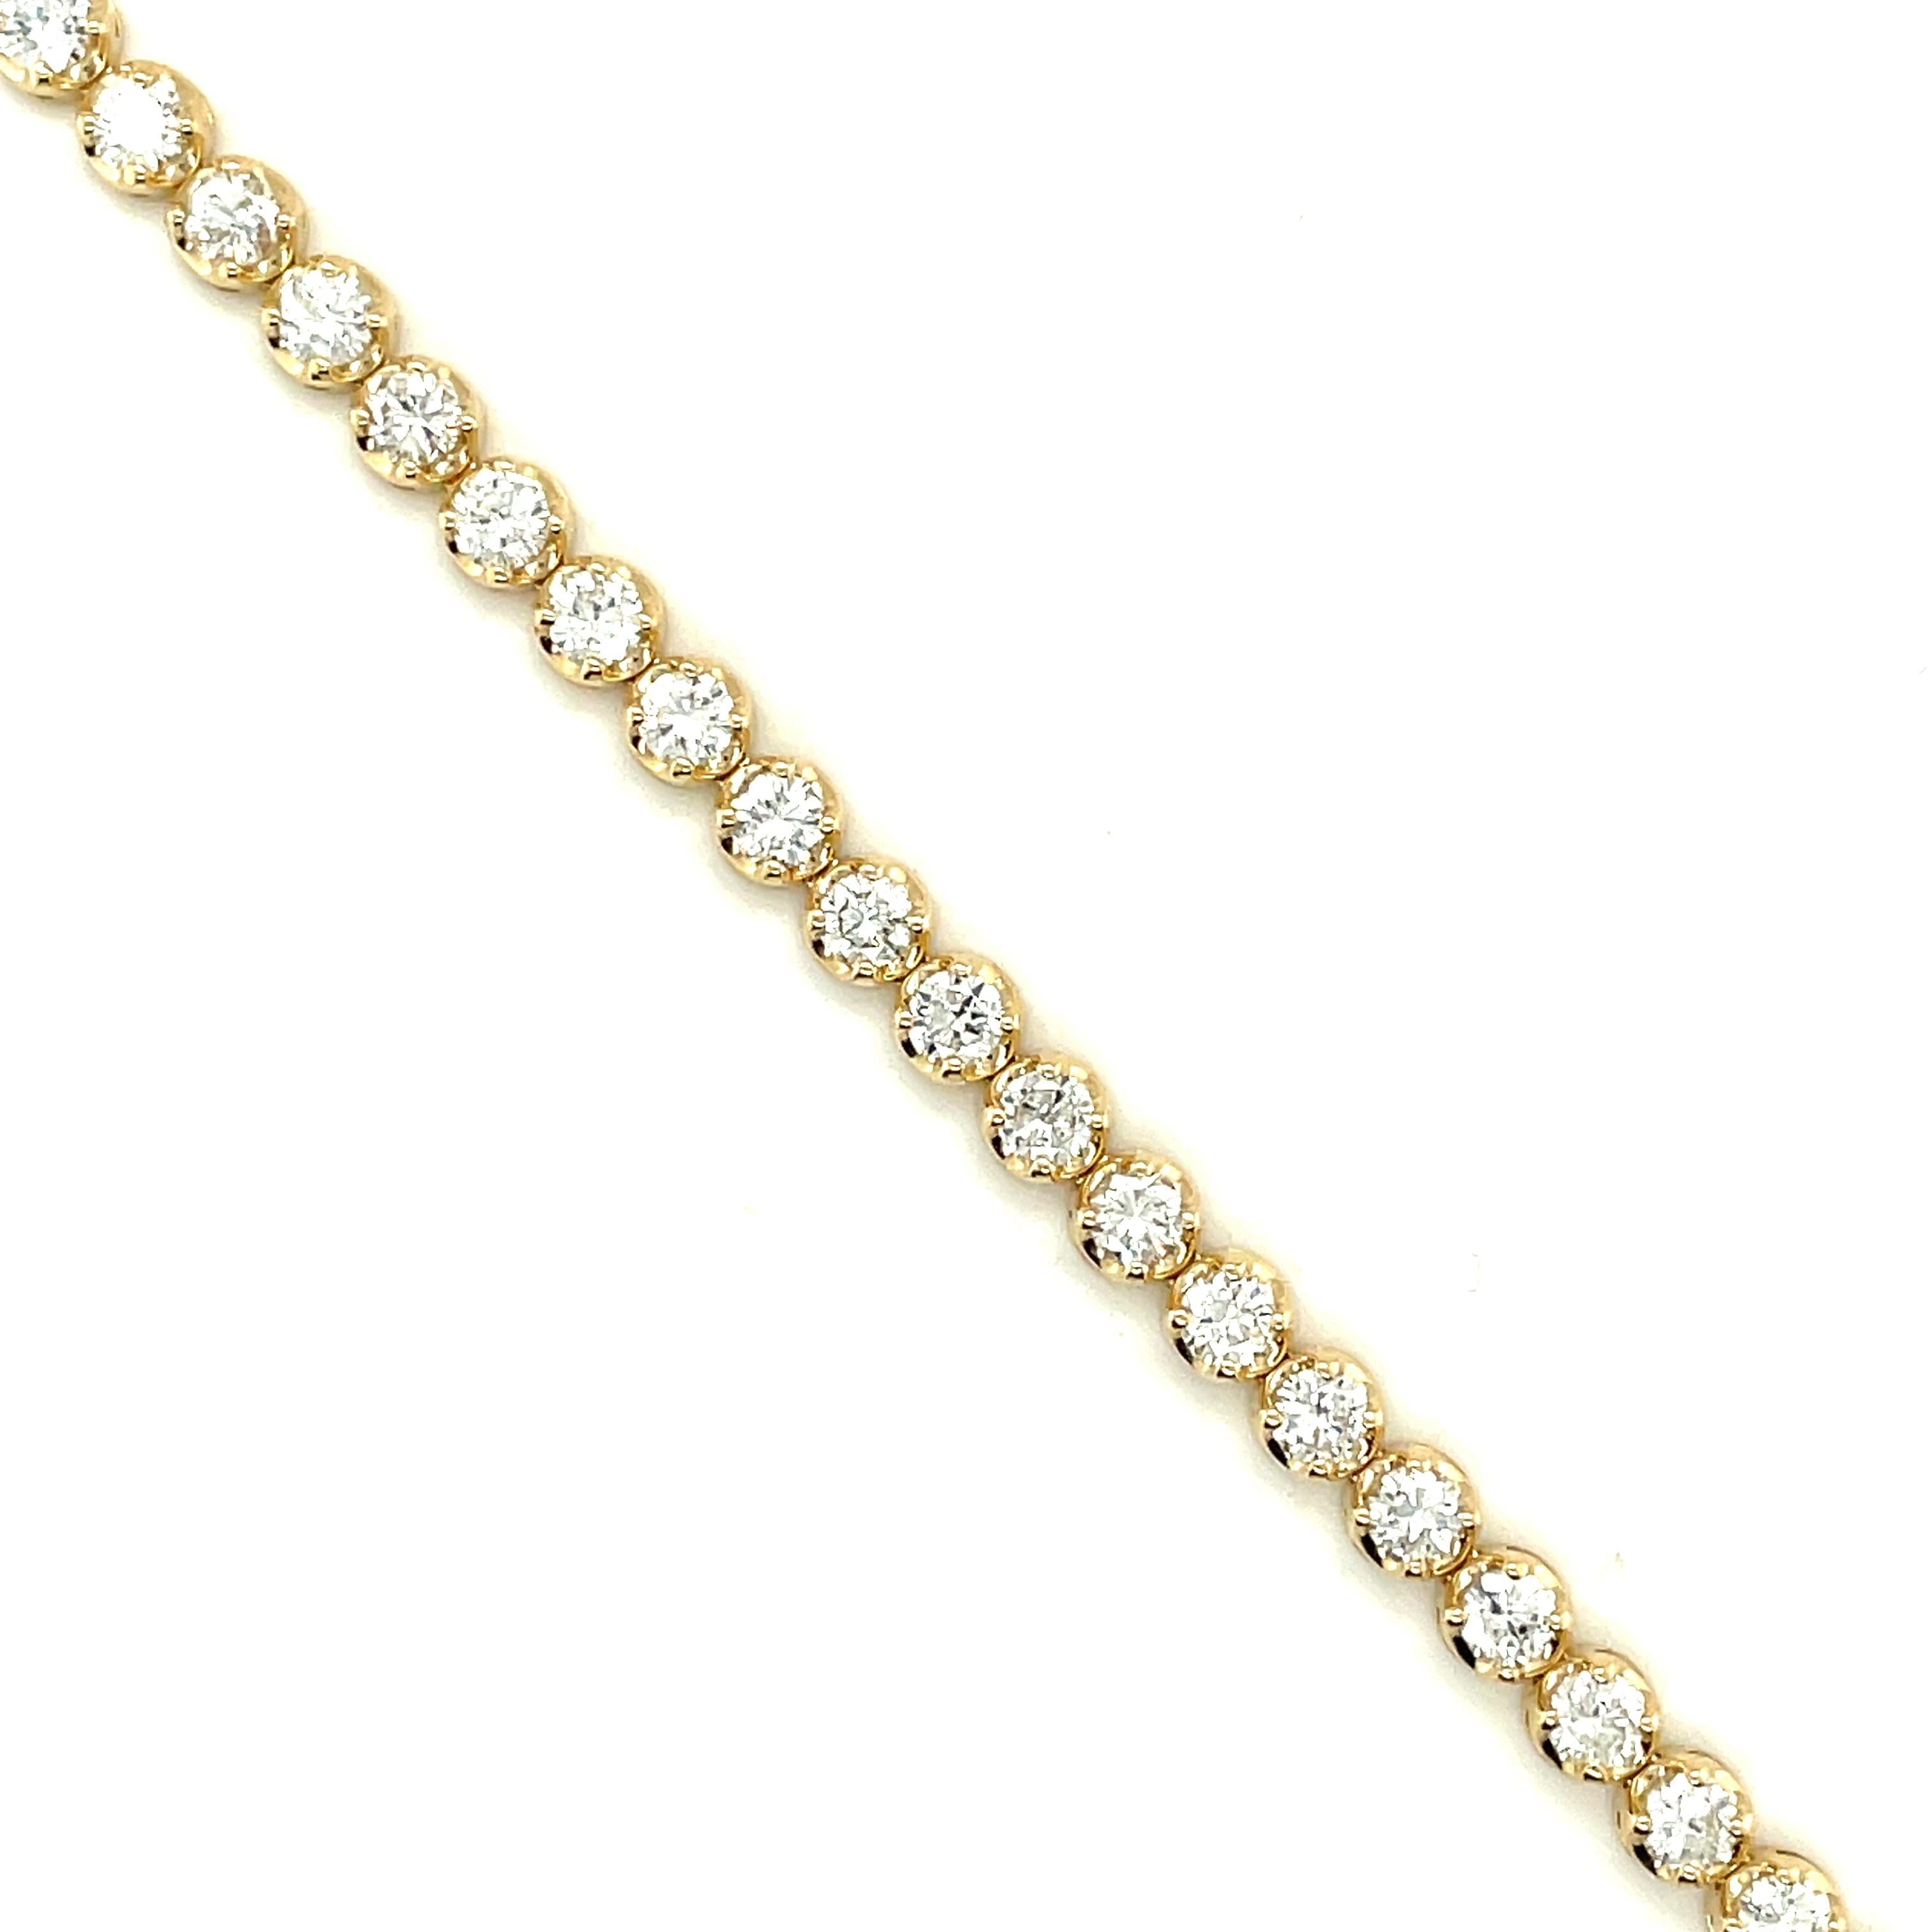 14K Yellow Gold Round cut Diamond Tennis Bracelet 

Diamonds:
4.8 carats
11 pointers
H color, VS stones

Buttercup Setting in 14K Gold

Grams 8.9